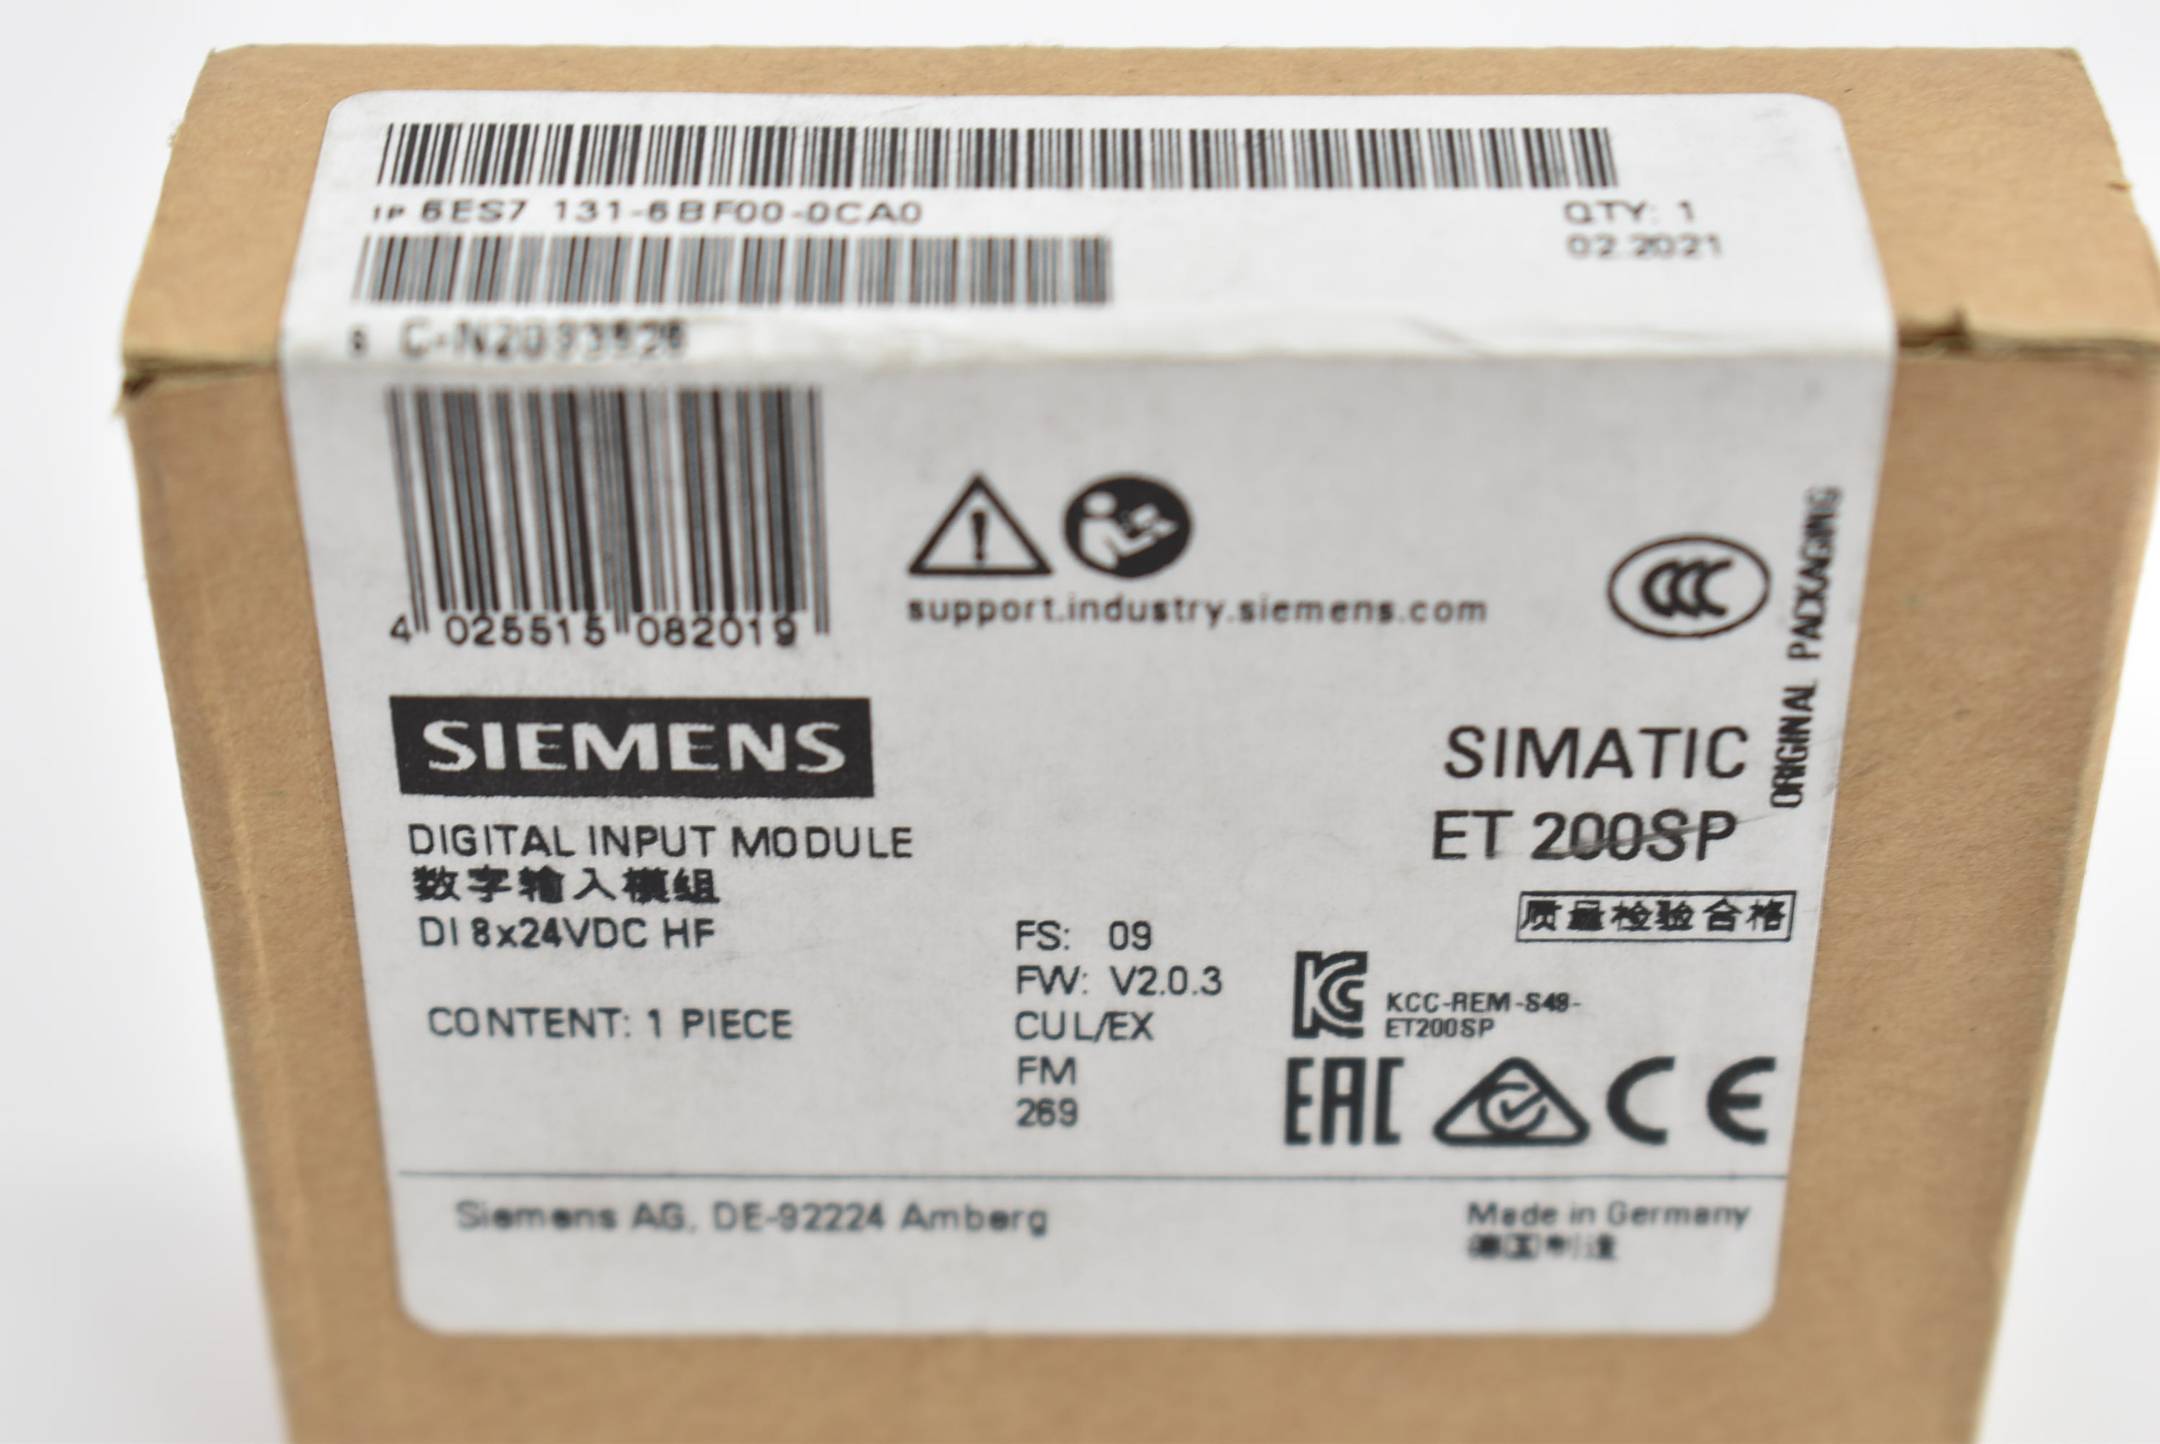 Siemens simatic ET 200SP digital 6ES7131-6BF00-0CA0 ( 6ES7 131-6BF00-0CA0 ) FS9